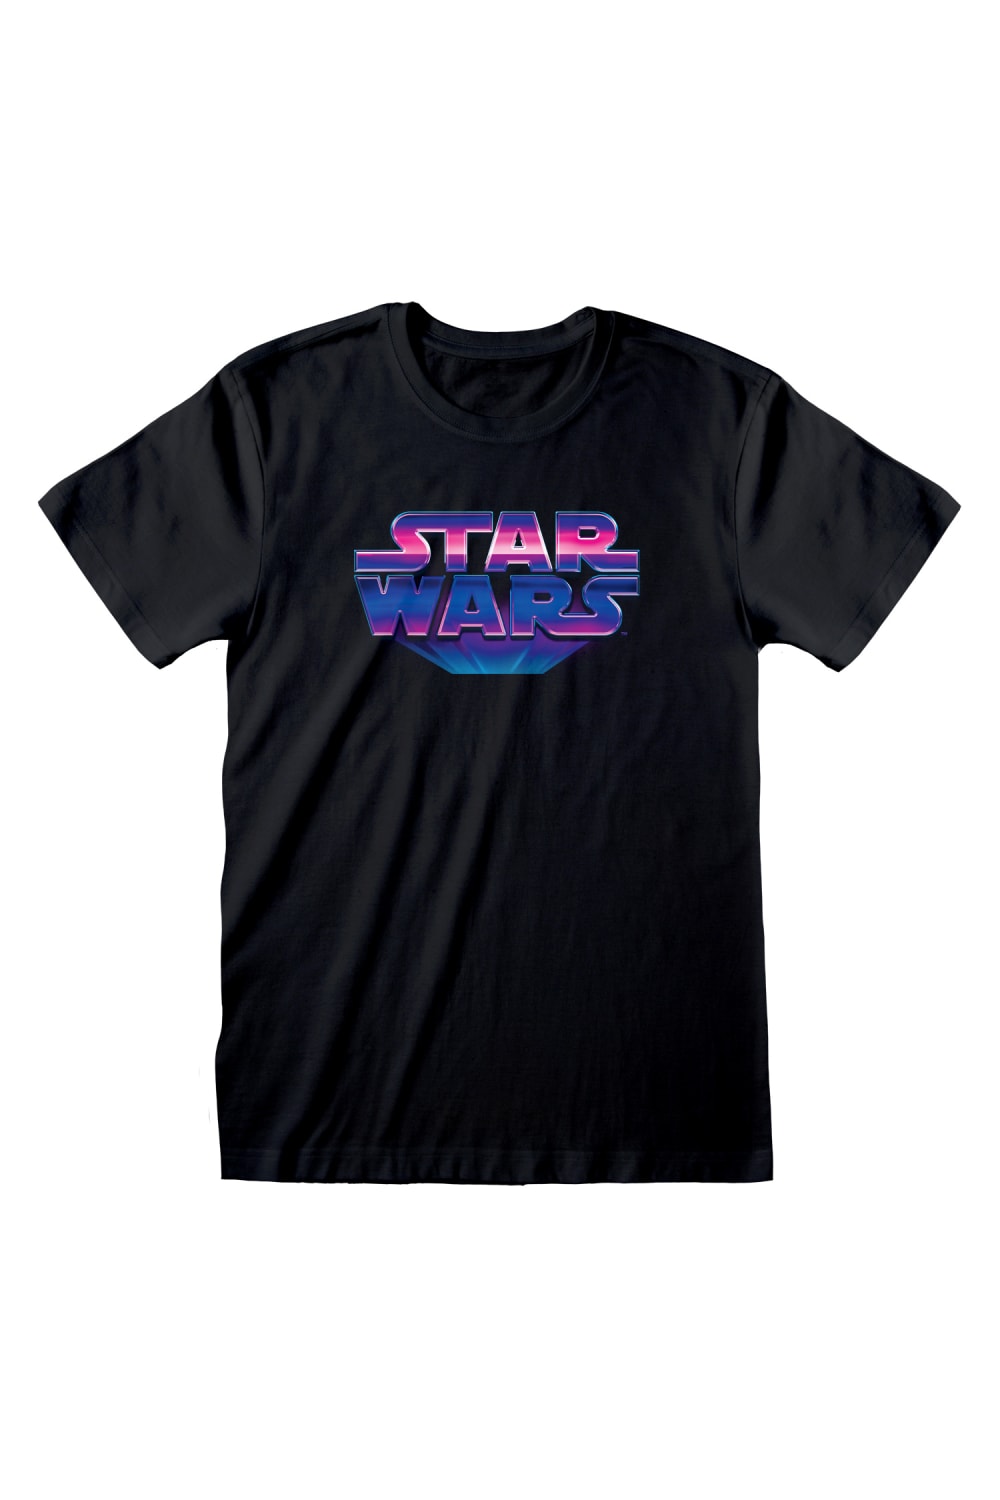 Star Wars Unisex Adult 80s Logo T-Shirt (Black)